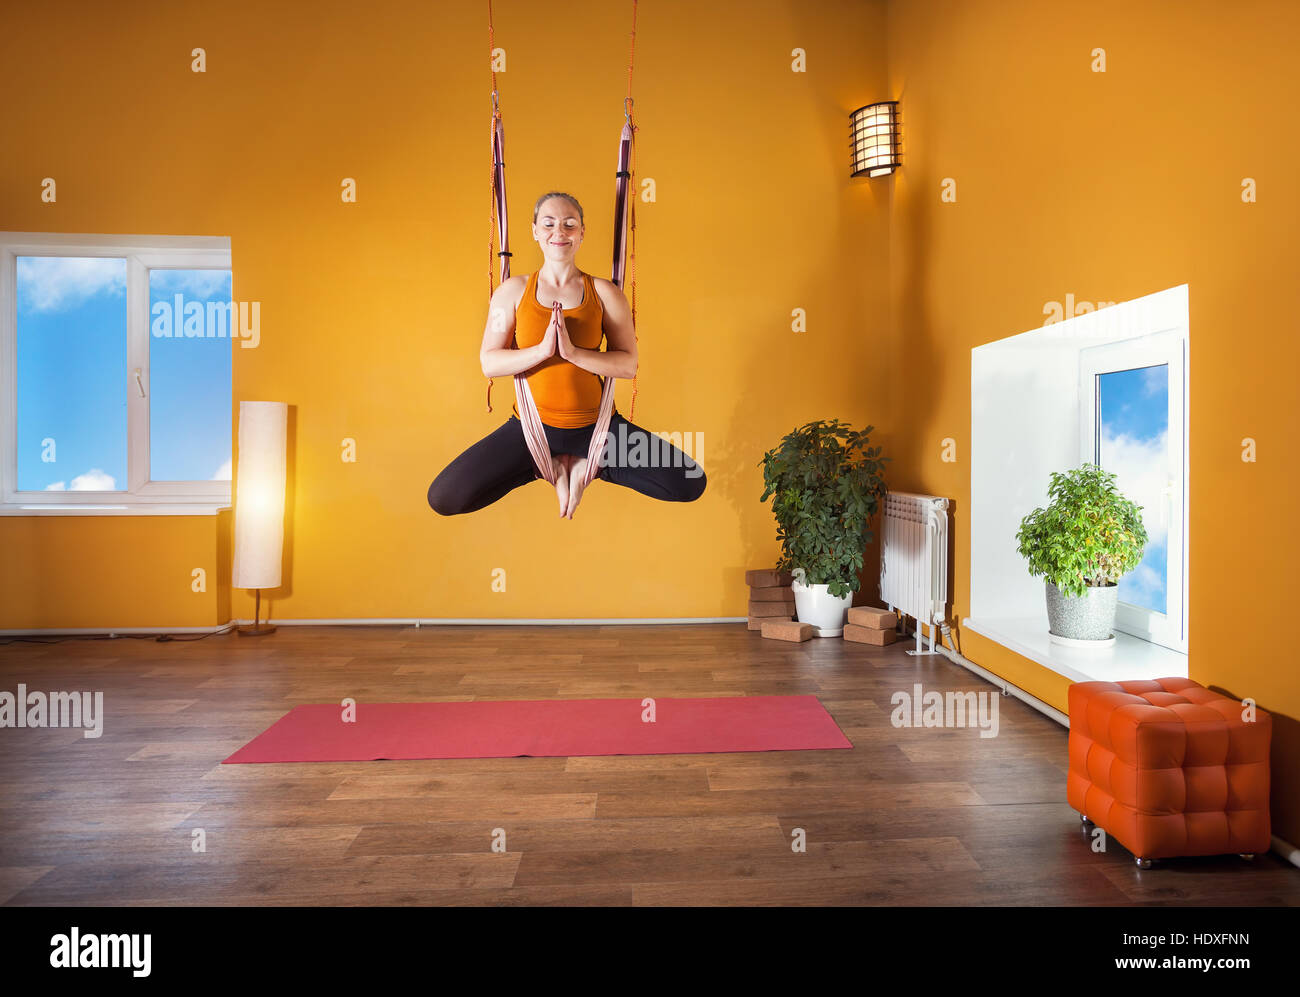 Junge Frau tut Antigravity Yoga meditativen Position im Studio mit gelben Wänden Stockfoto